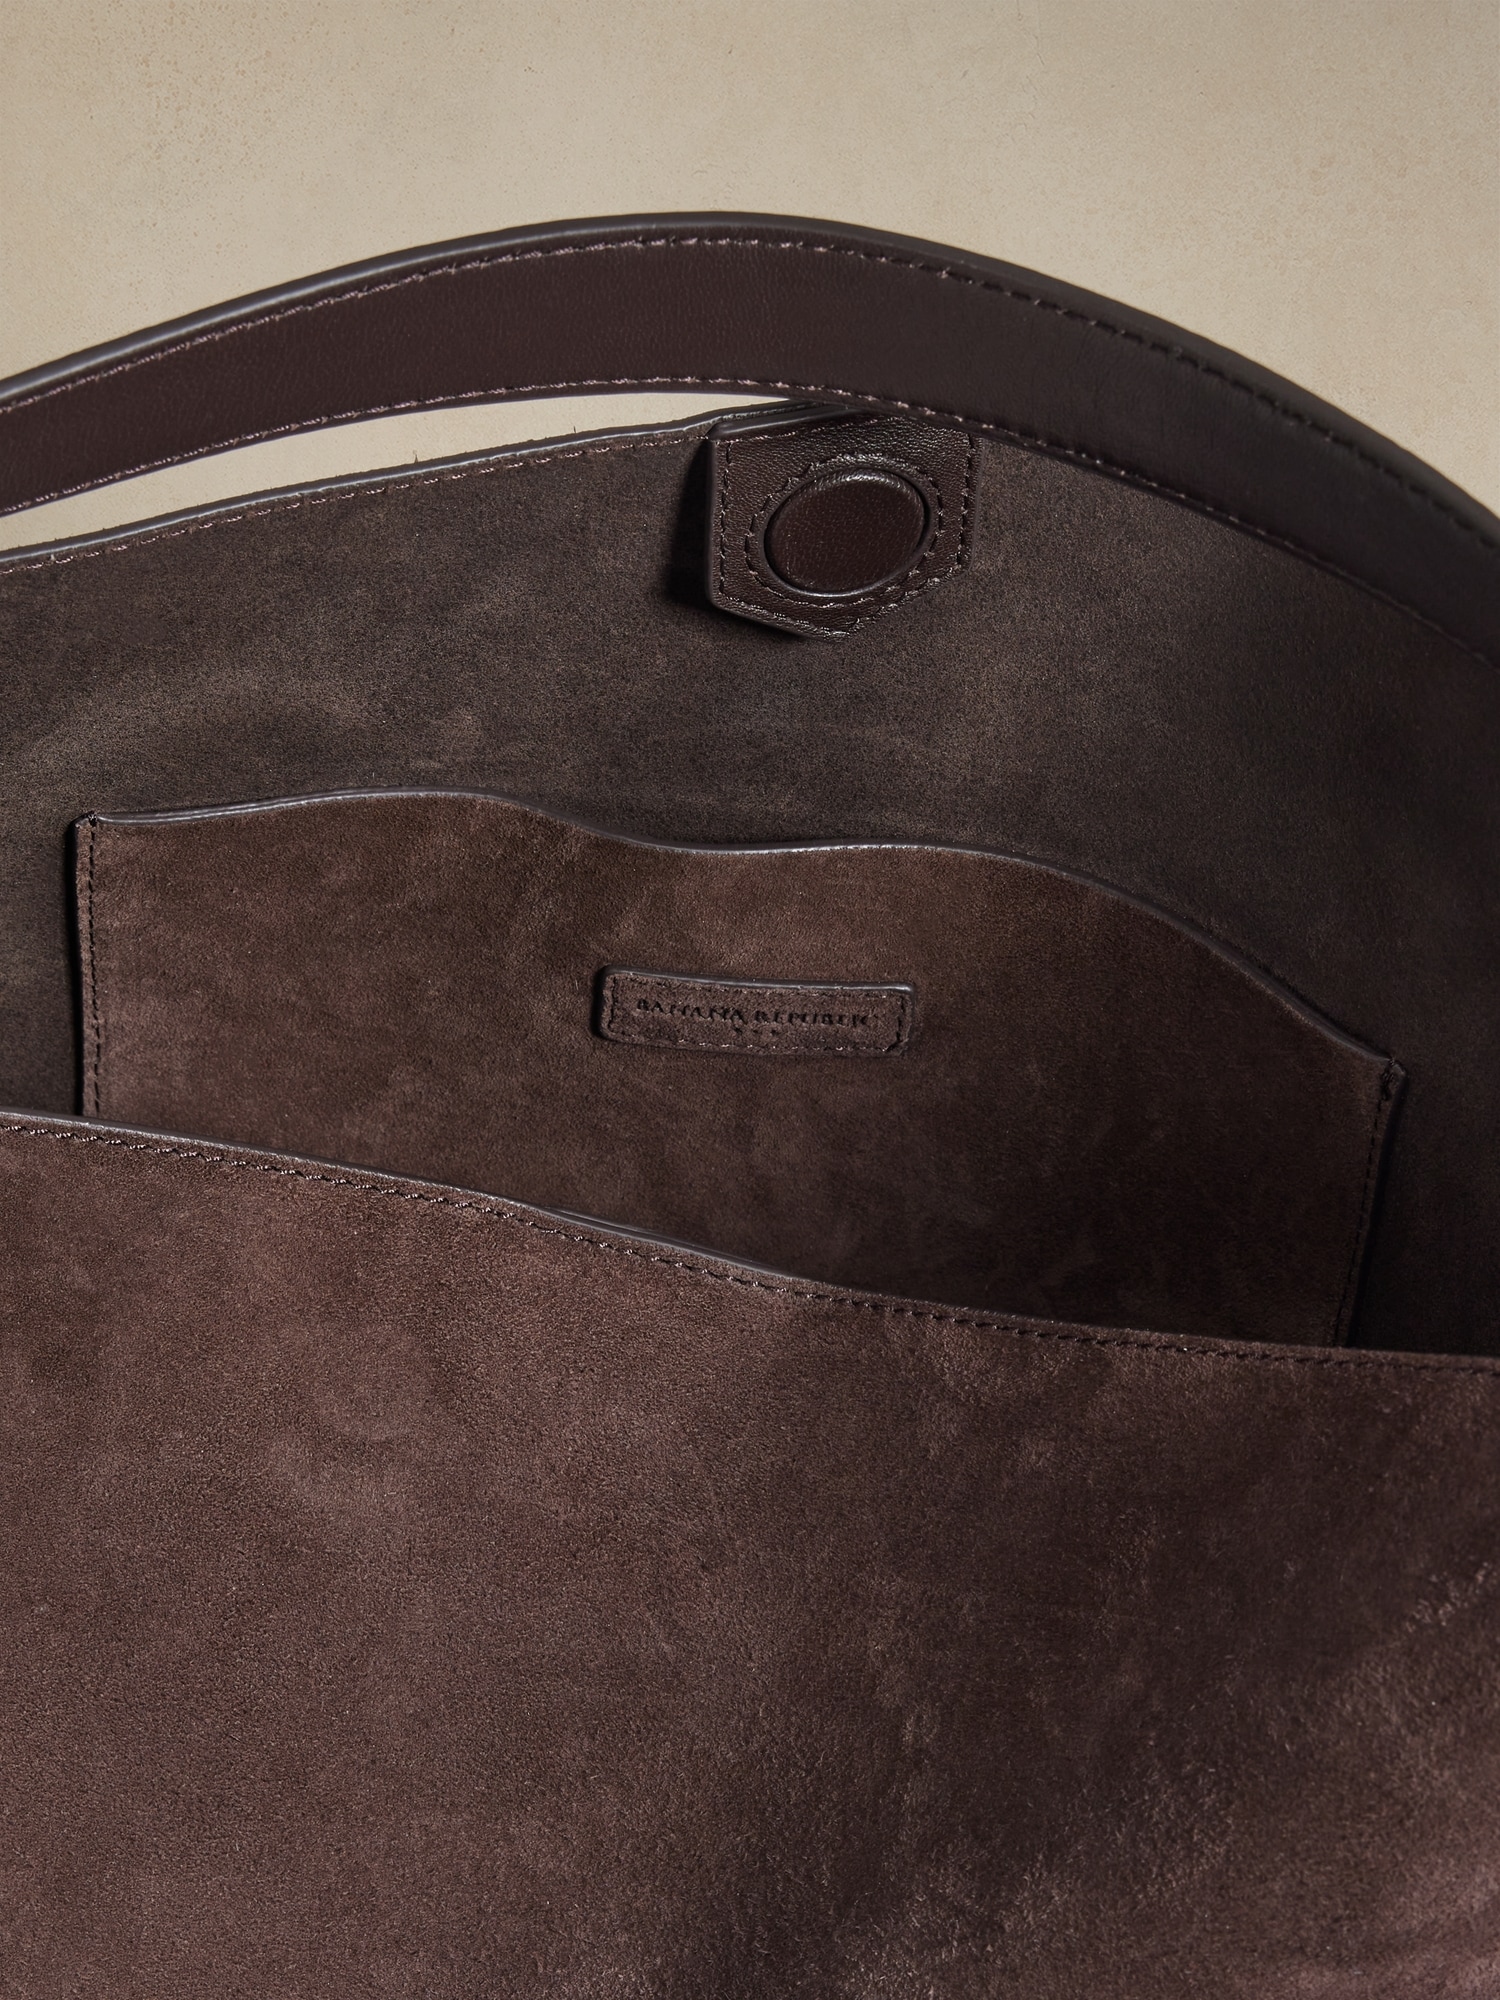 Leather Braid Strap Hobo Bag